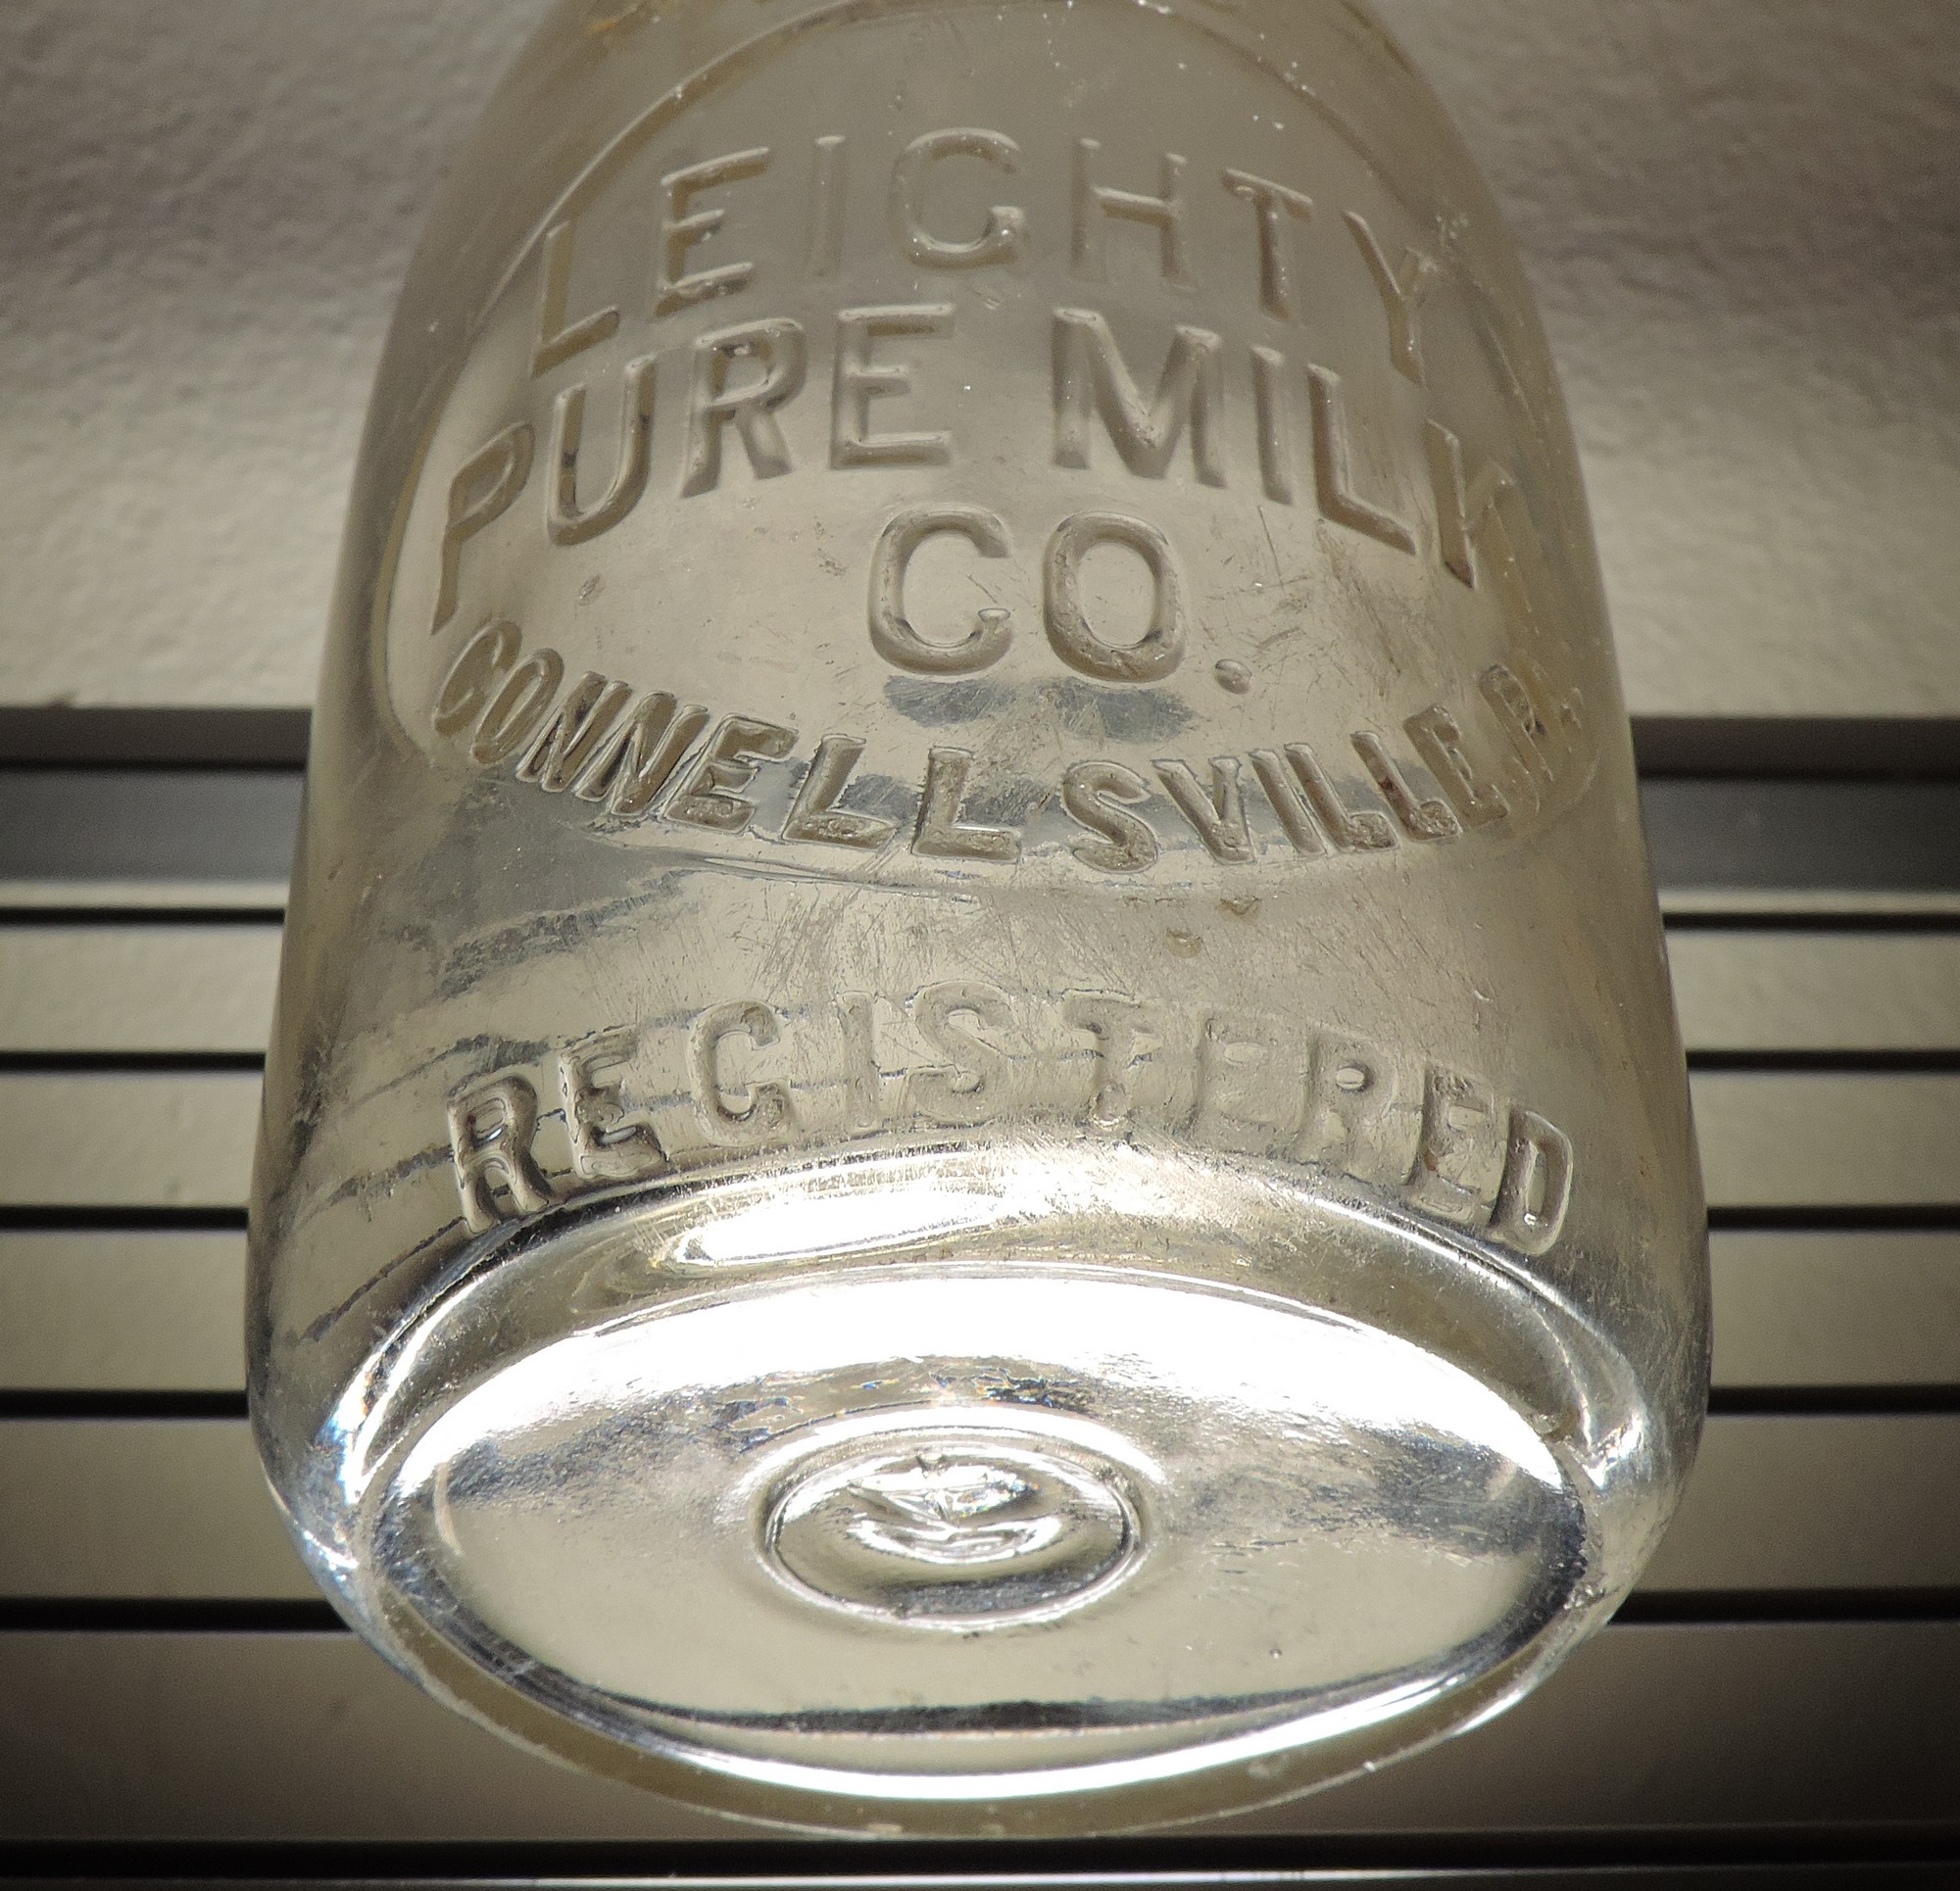 1934 Leighty Pure Milk Dairy Bottle (1)